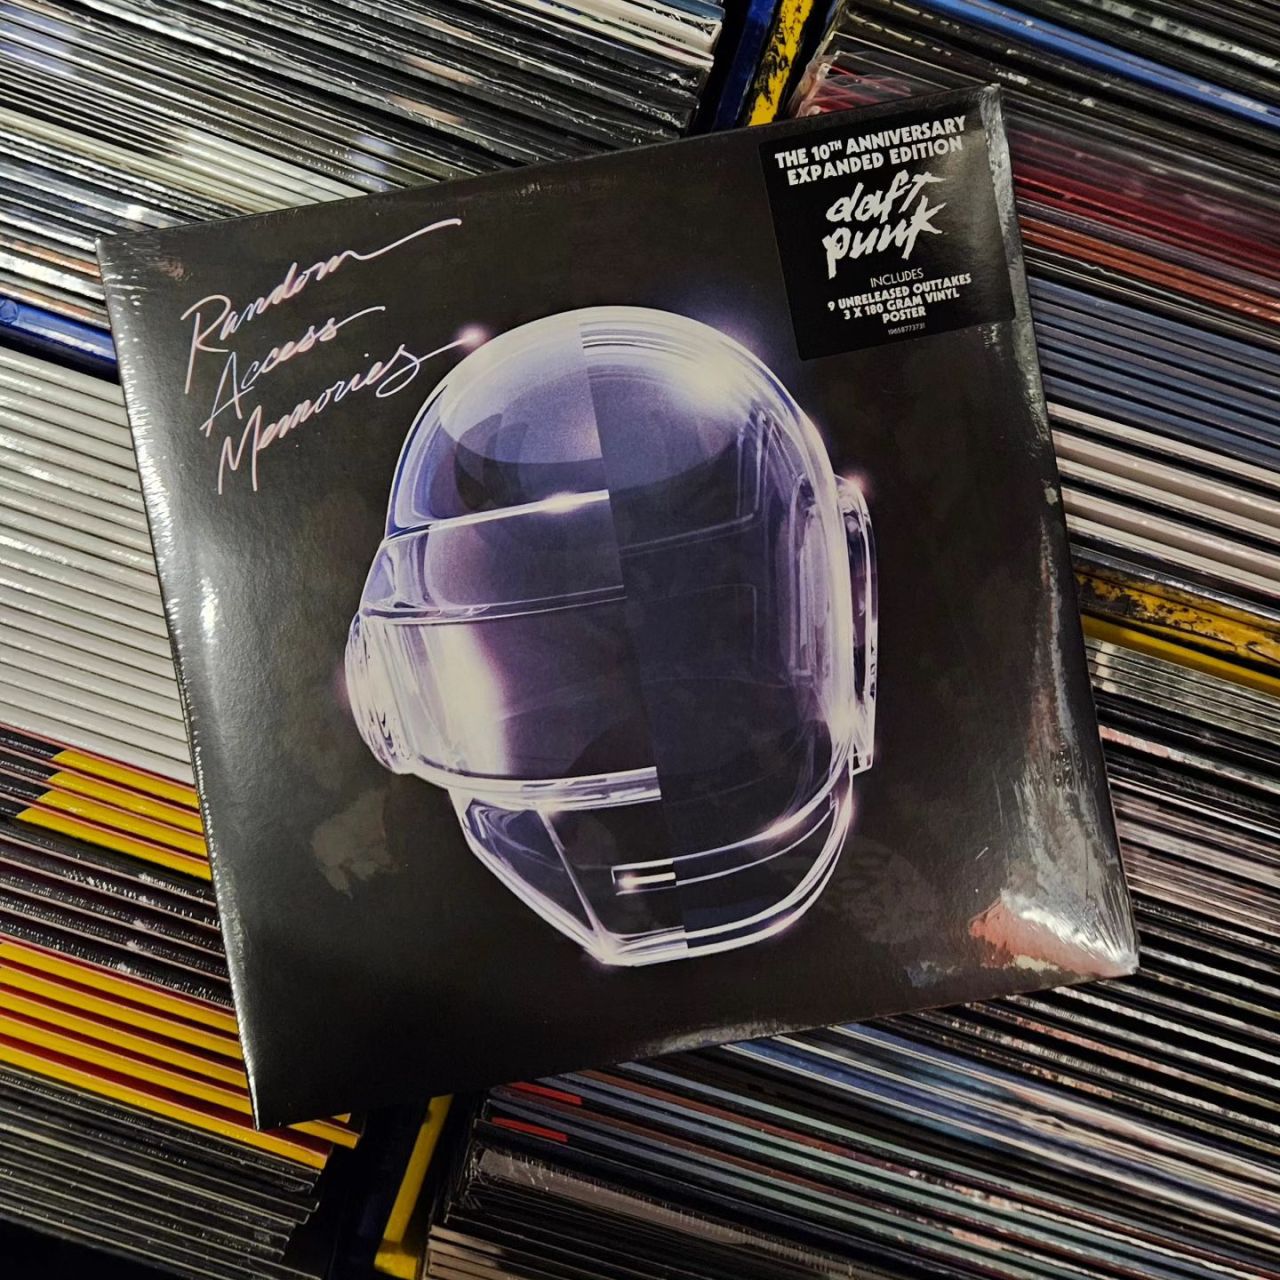 Daft Punk album 'Random Access Memories' turns 8 years old